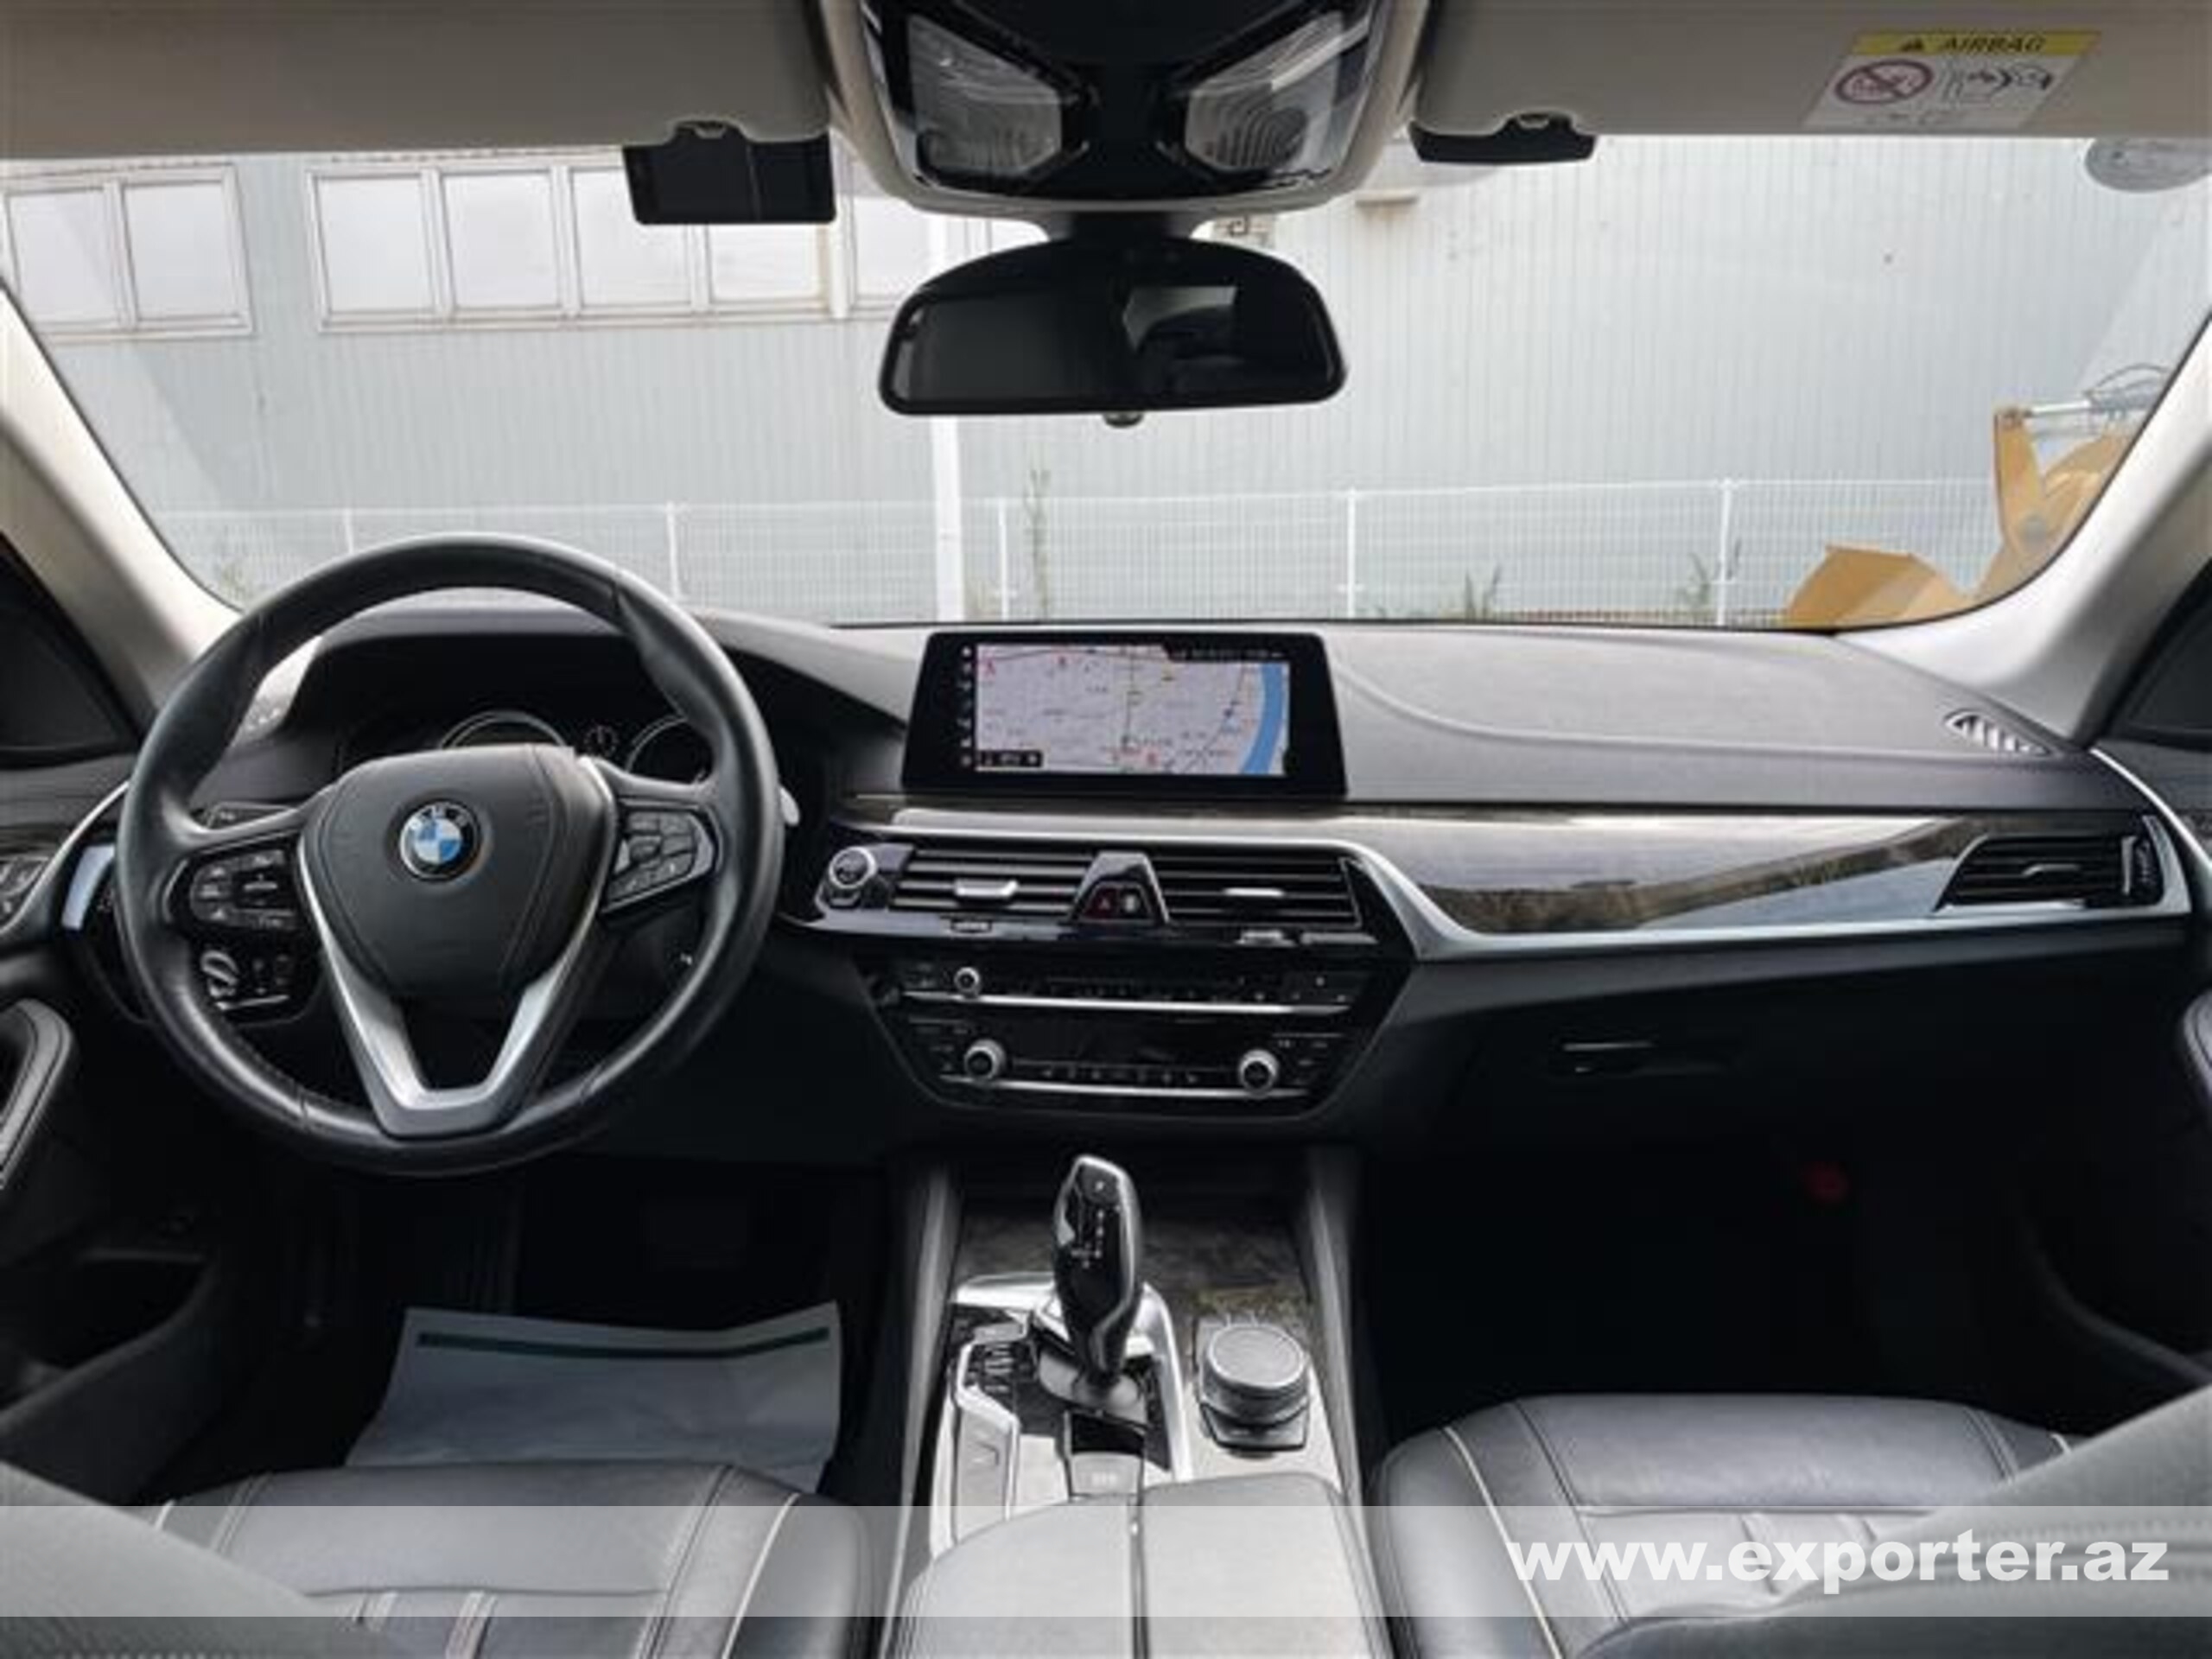 BMW 530i Luxury (photo: 17)